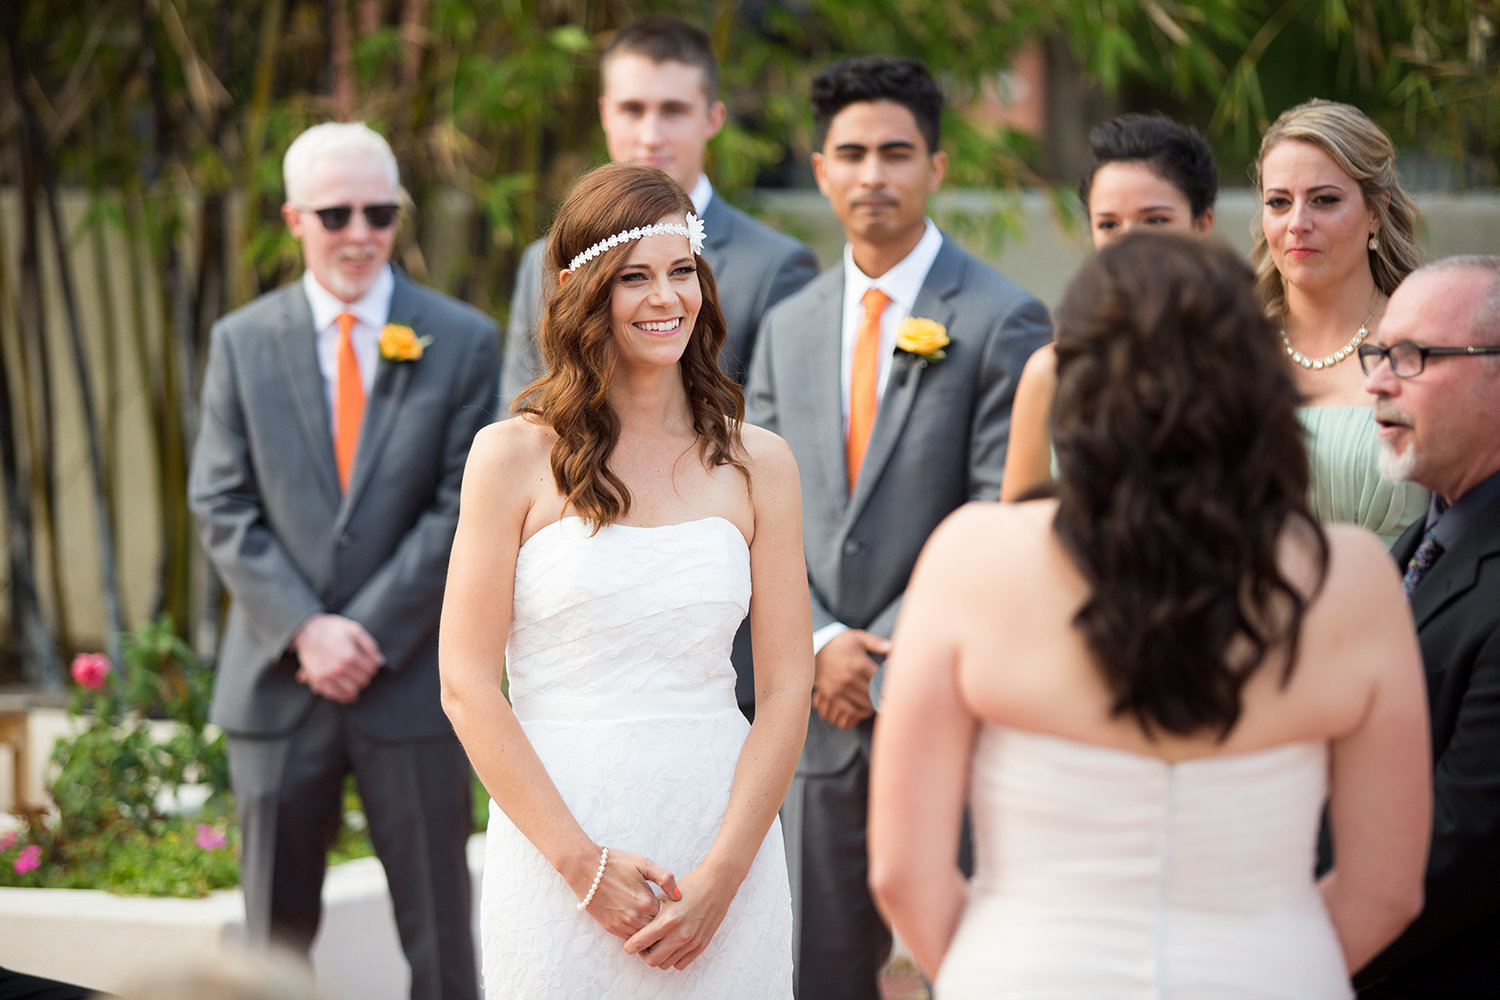 The wedding ceremony | LGBT Wedding